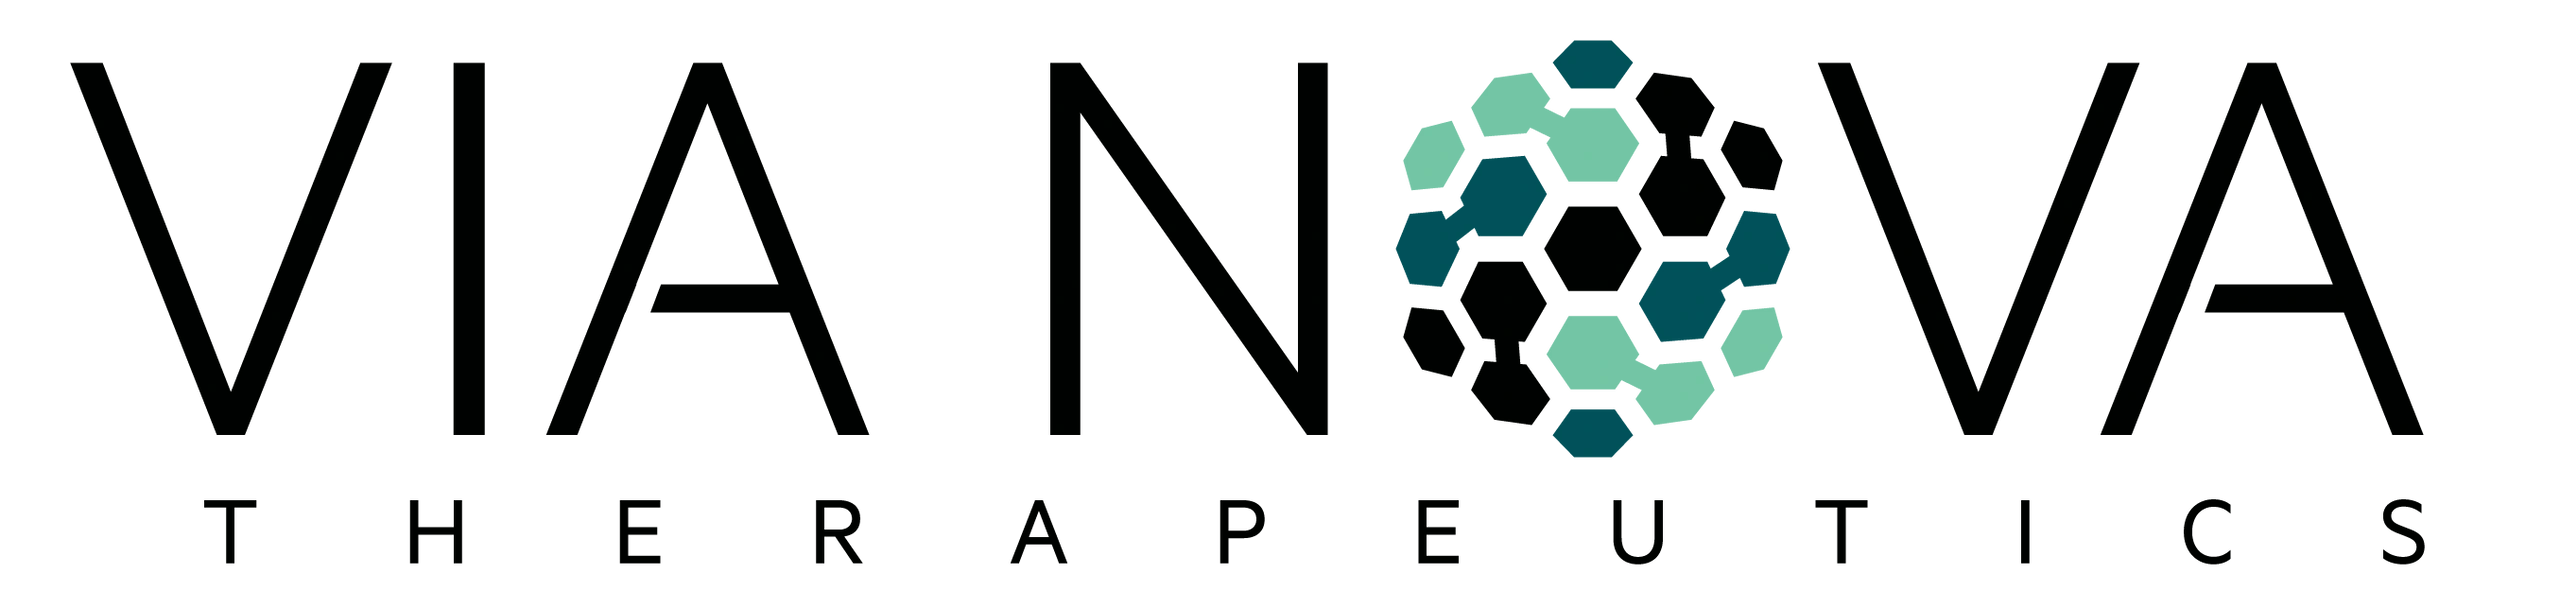 Via Nova Therapeutics Logo